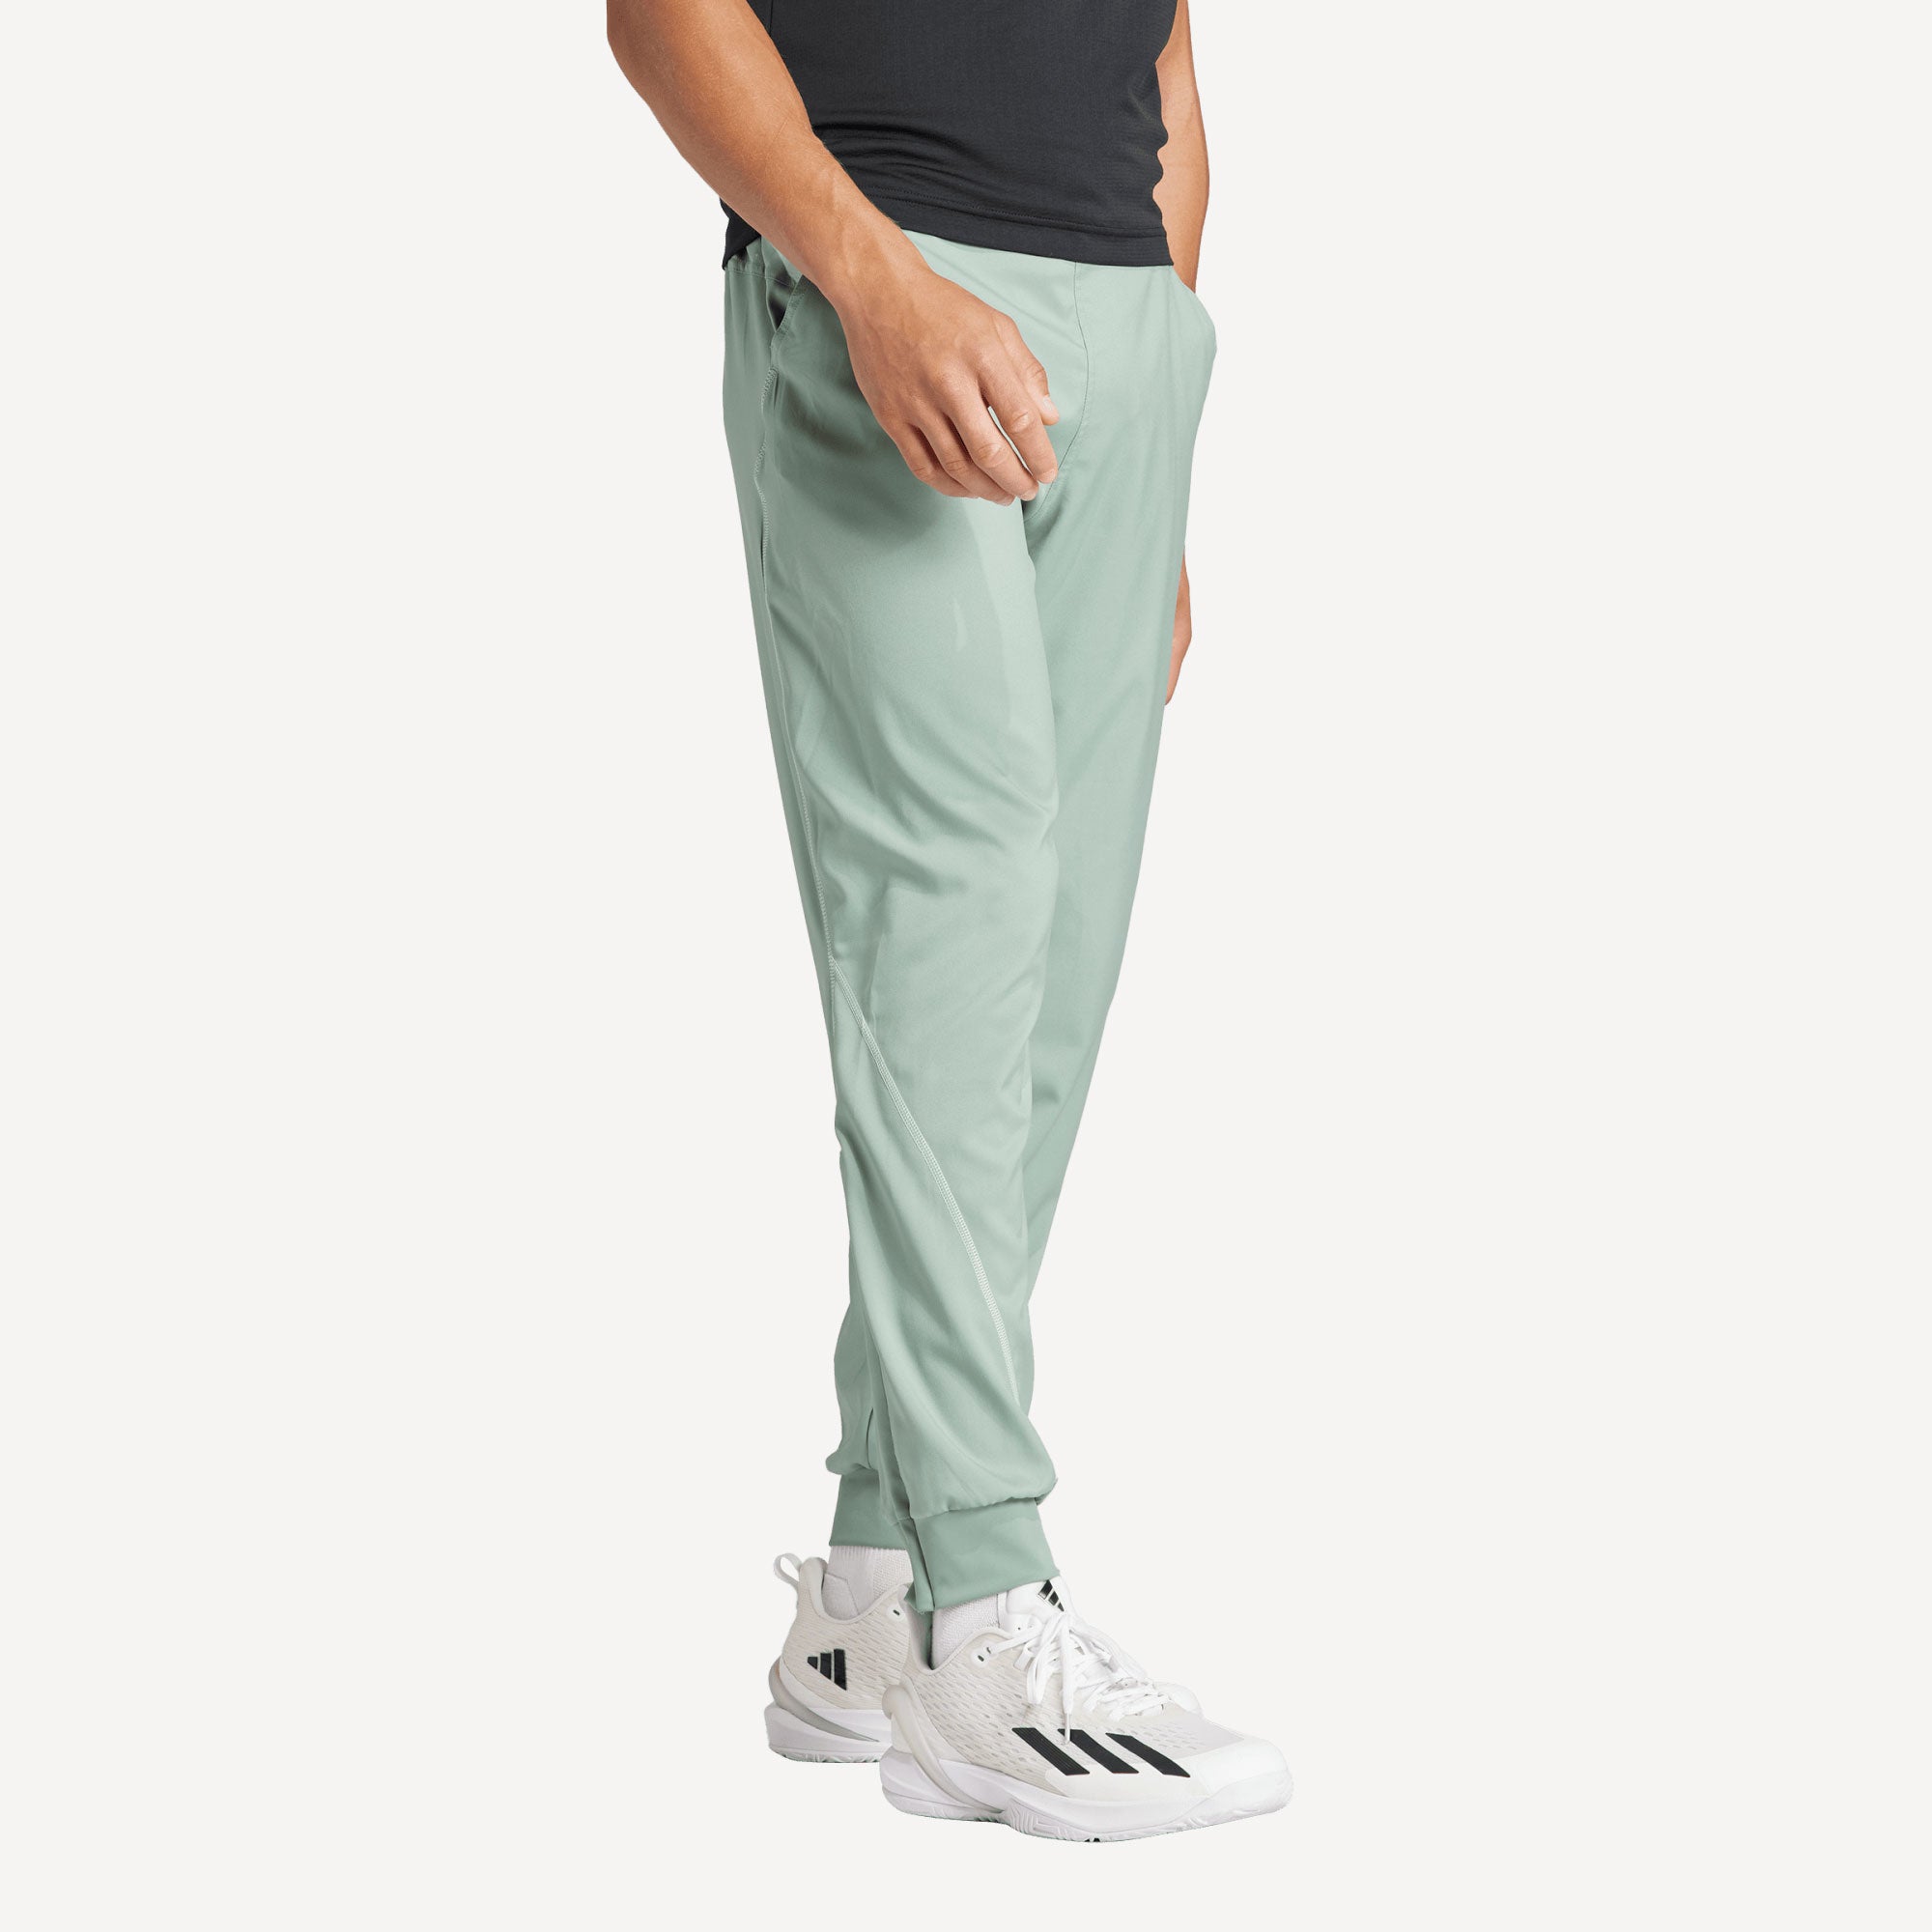 adidas Pro Melbourne Men's Tennis Pants - Green (3)